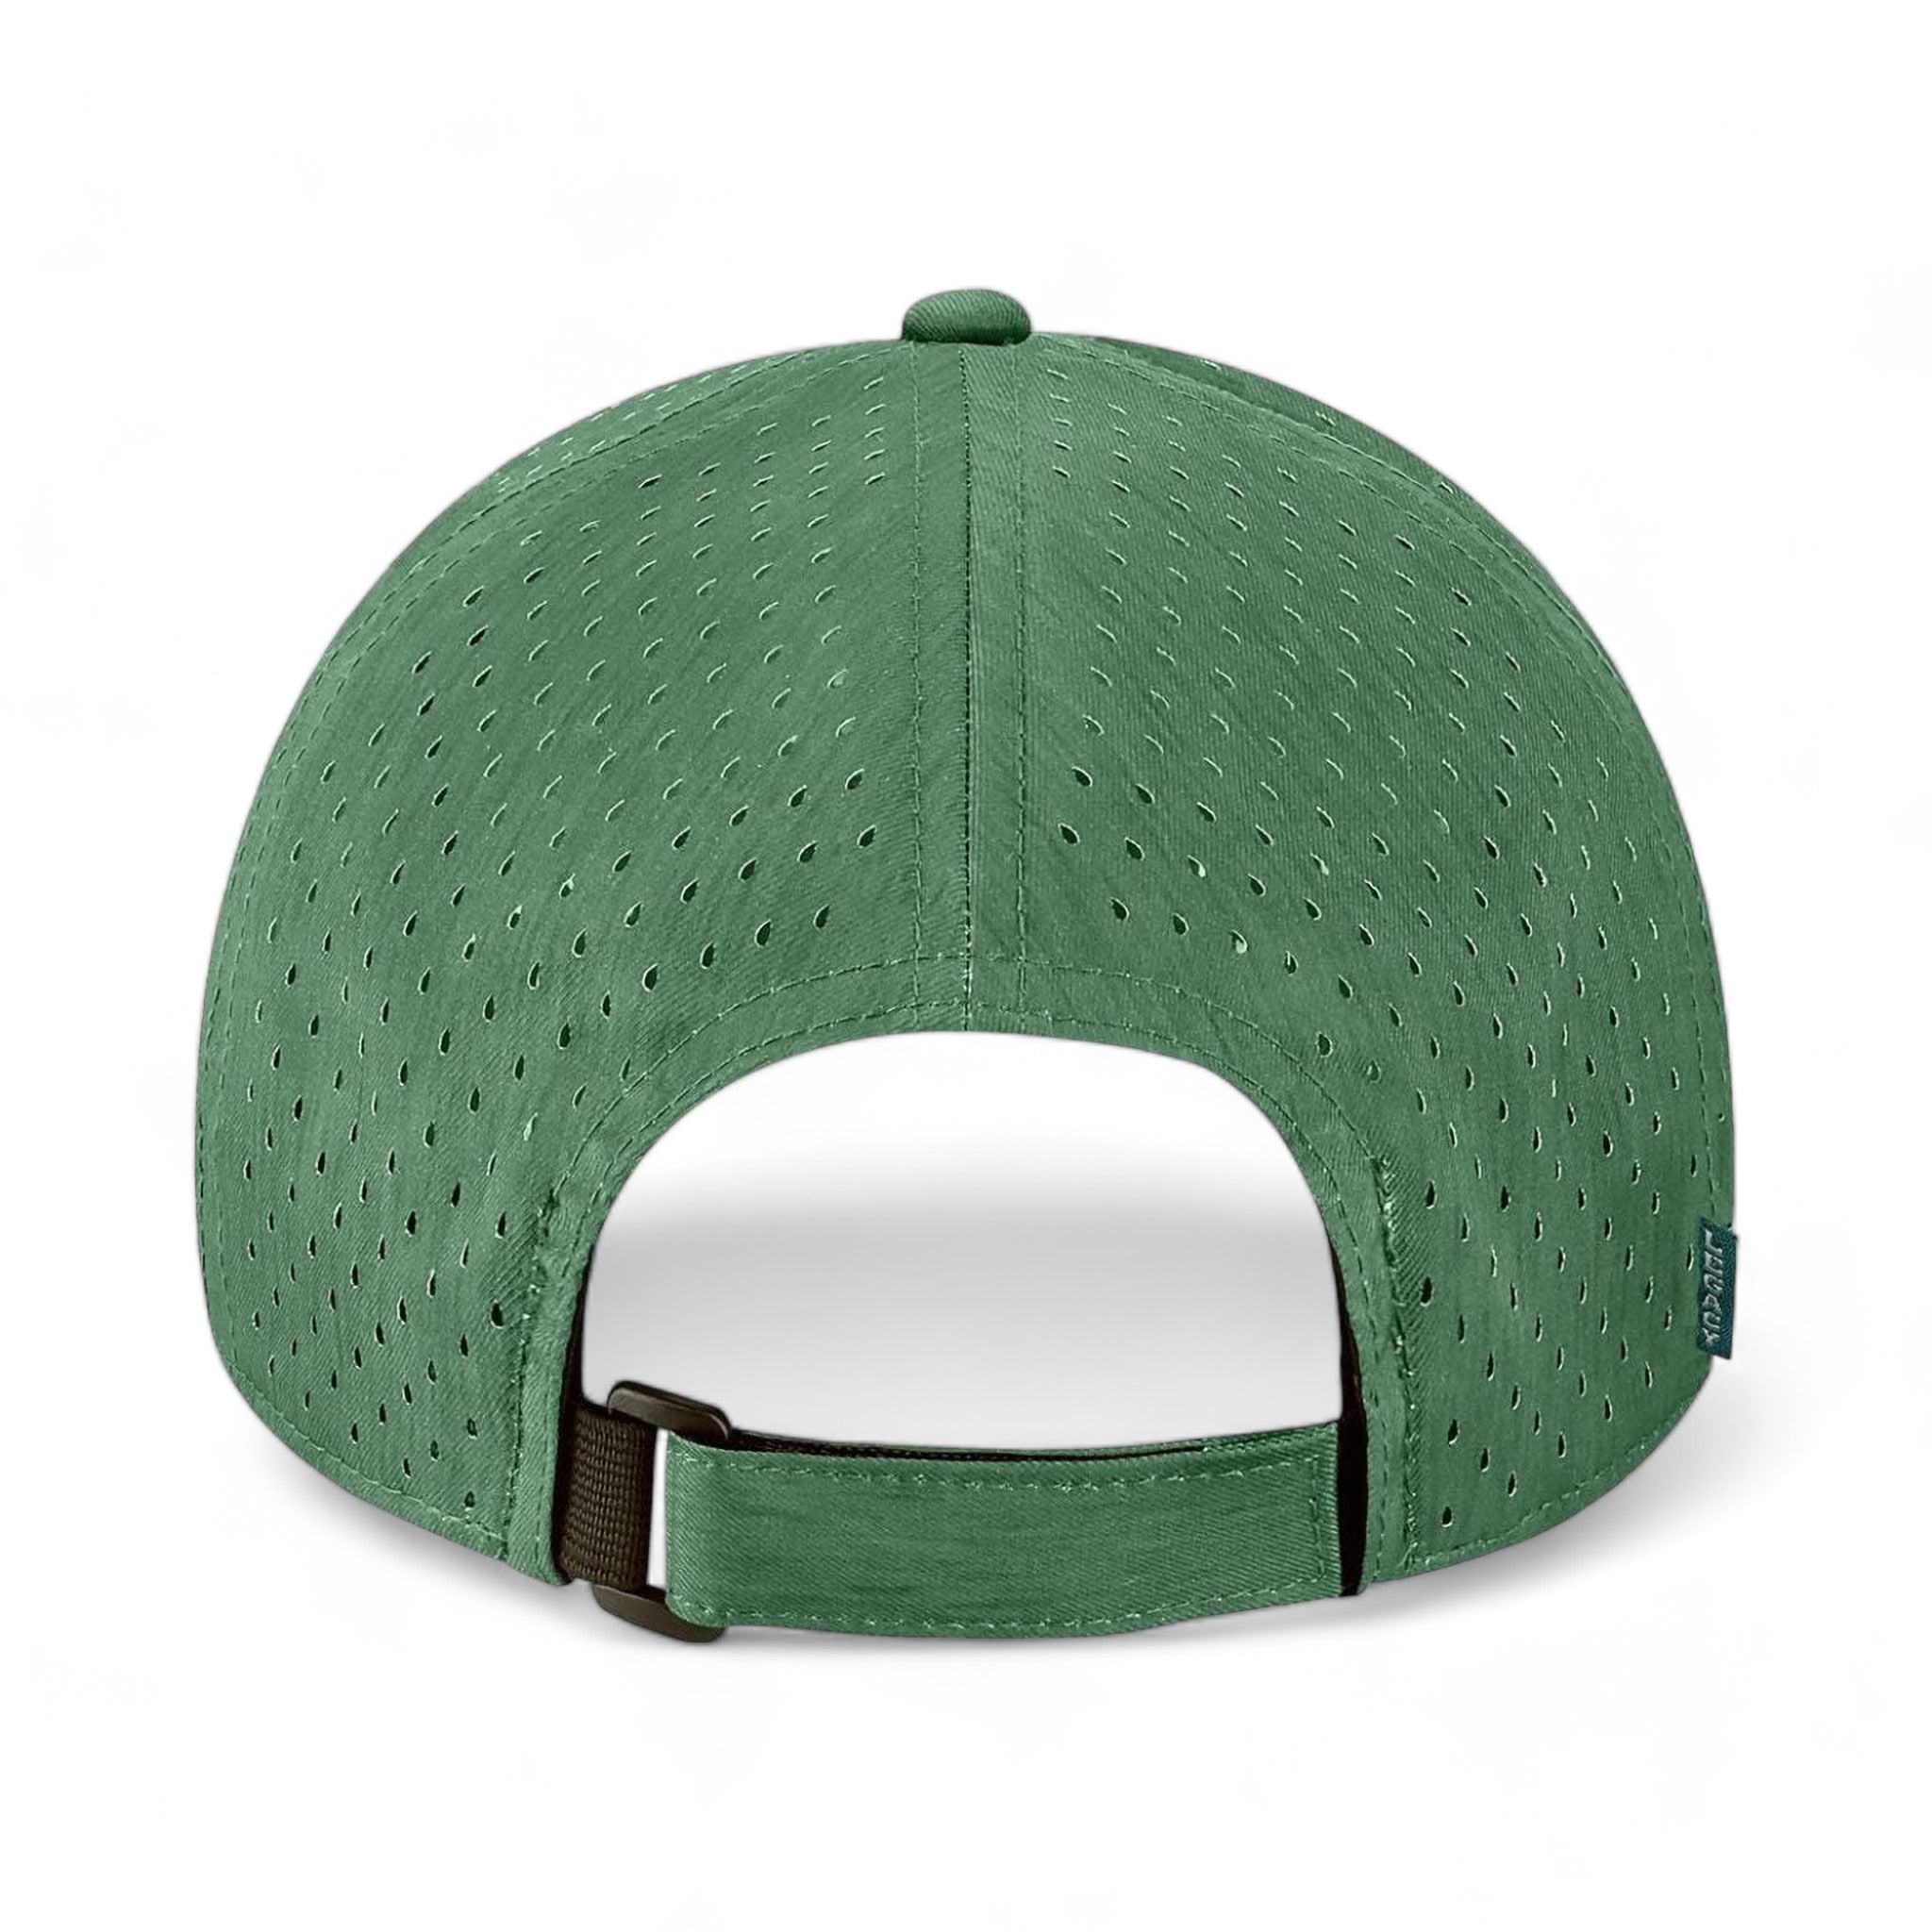 Back view of LEGACY RECS custom hat in eco dark green